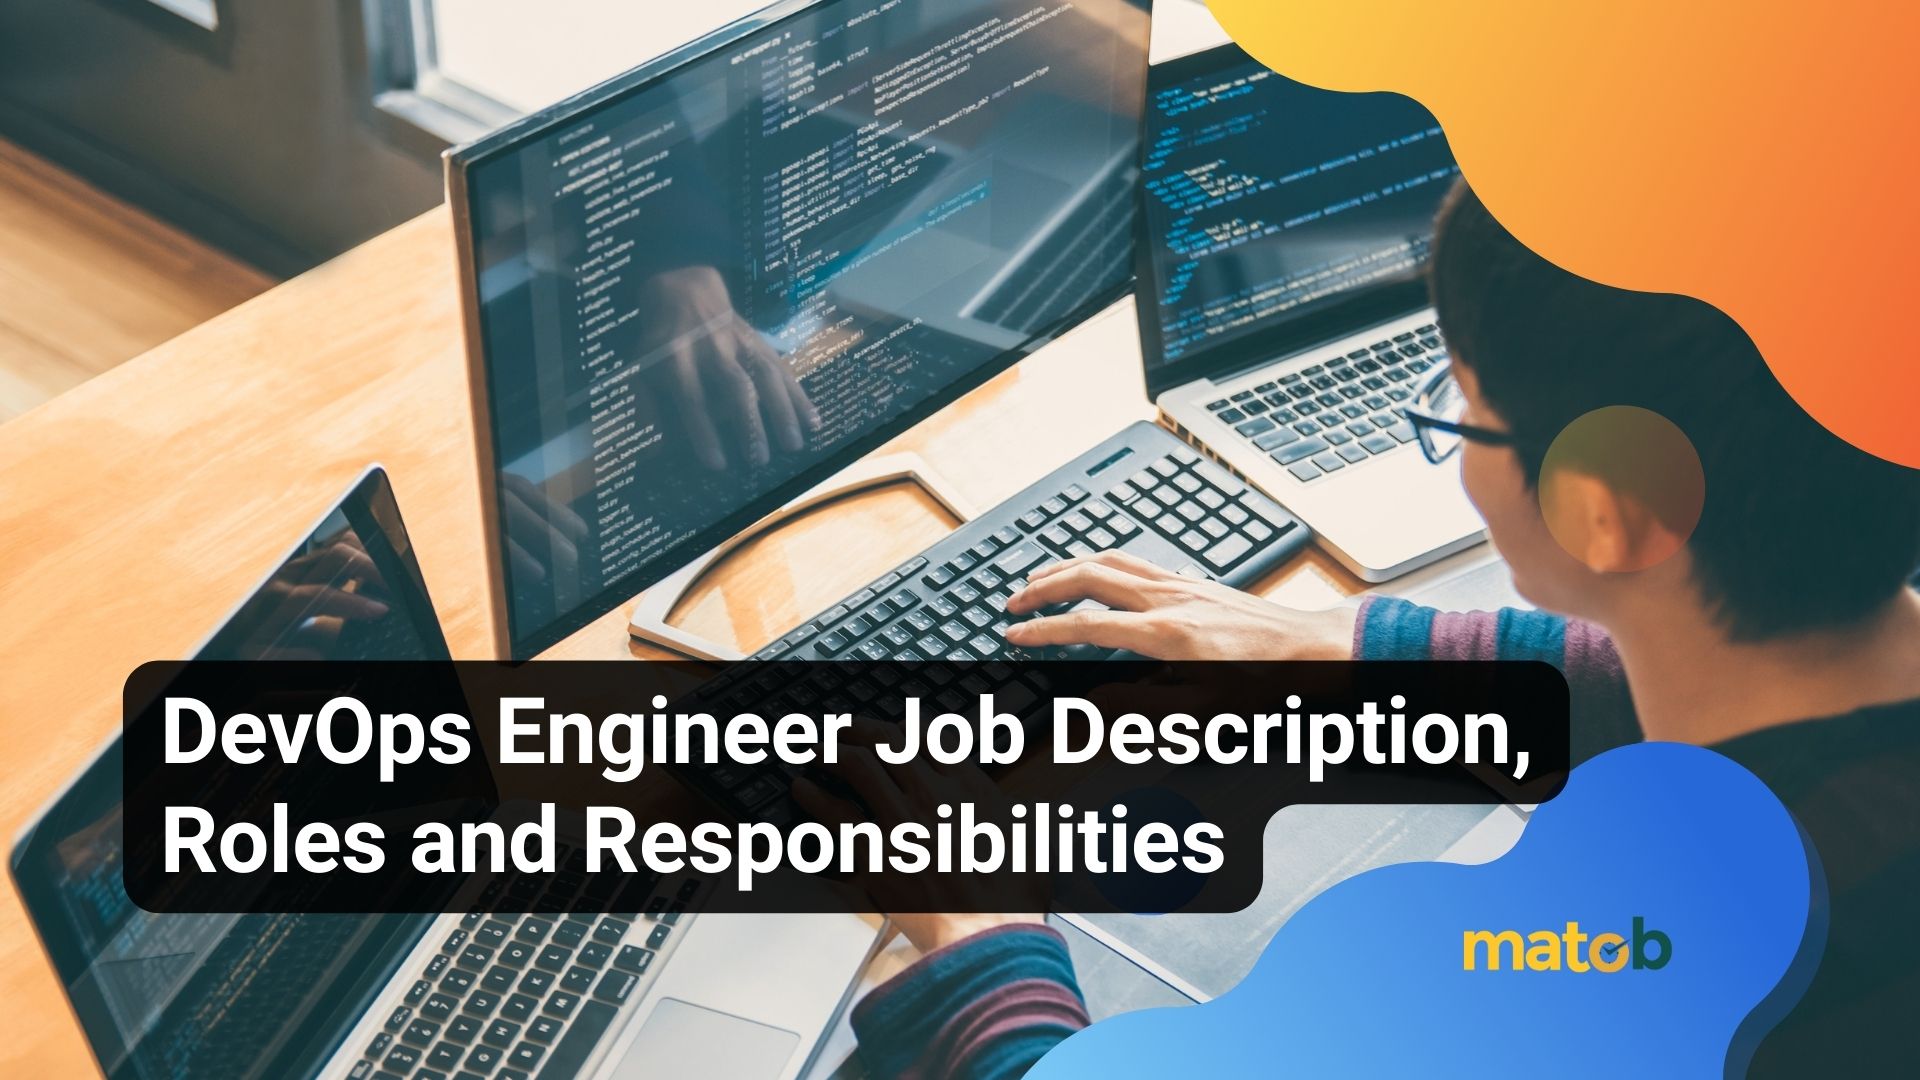 DevOps Engineer Job Description, Roles and Responsibilities